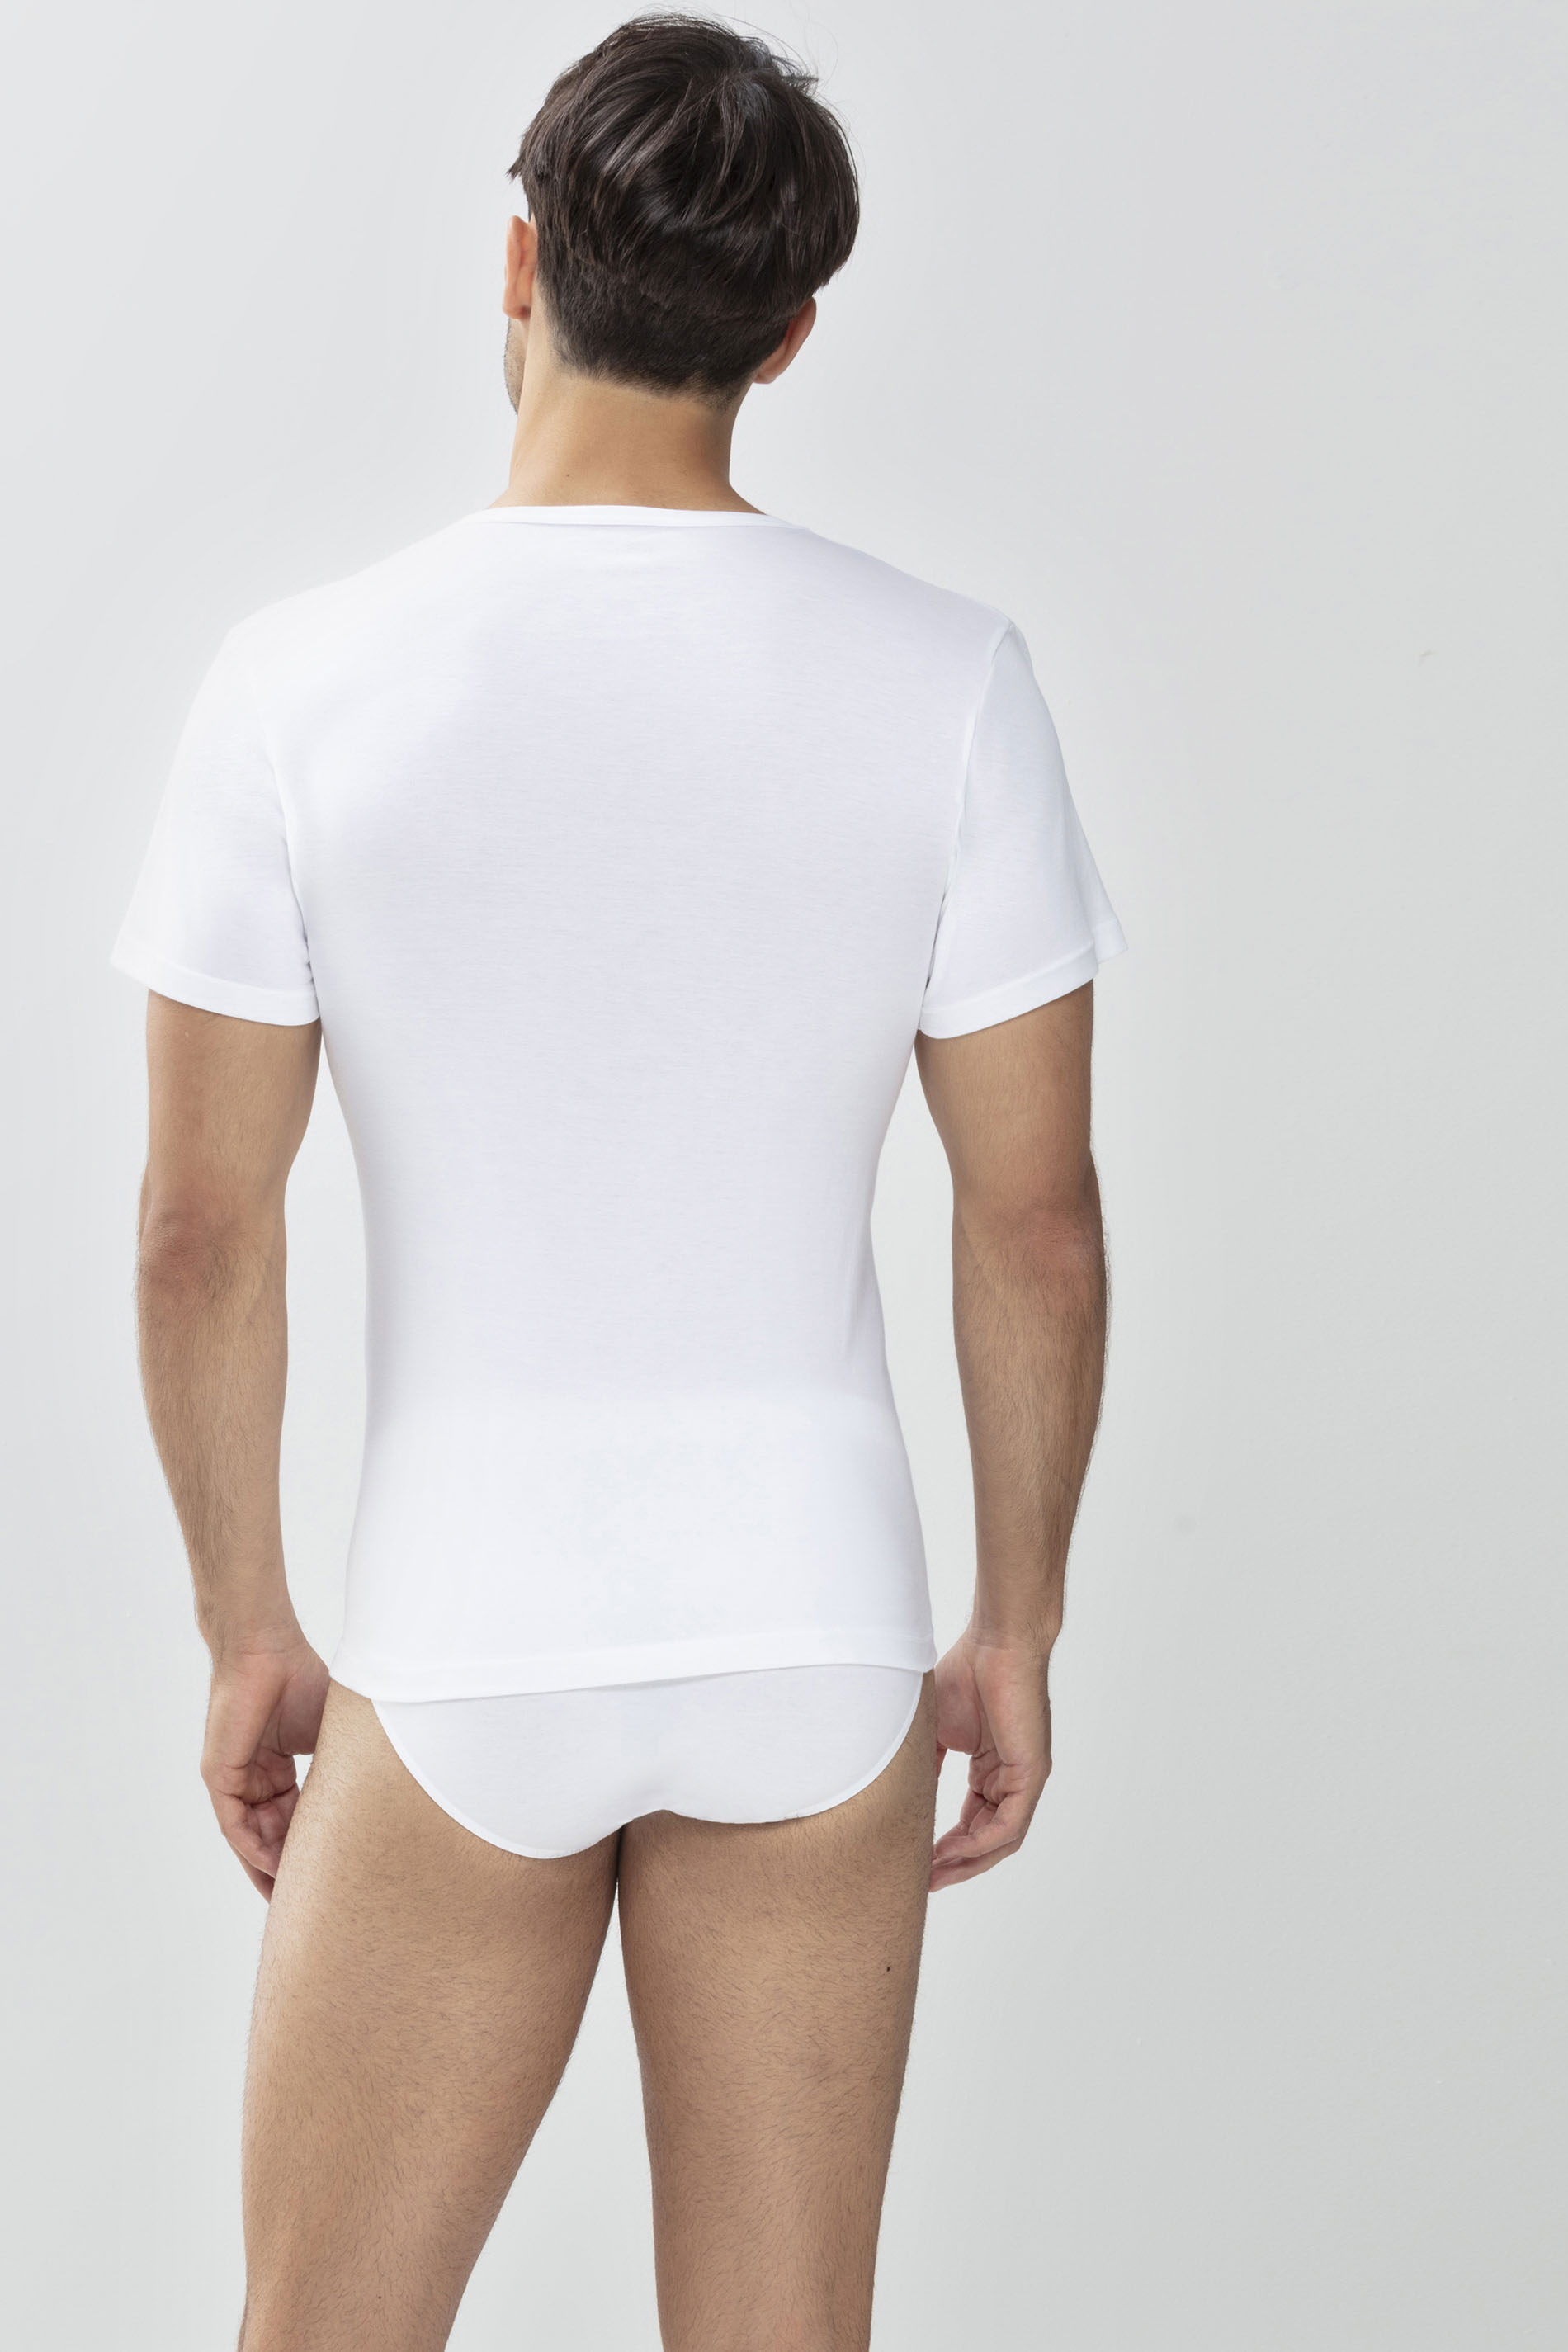 V-Neck Shirt White Serie Noblesse Rear View | mey®